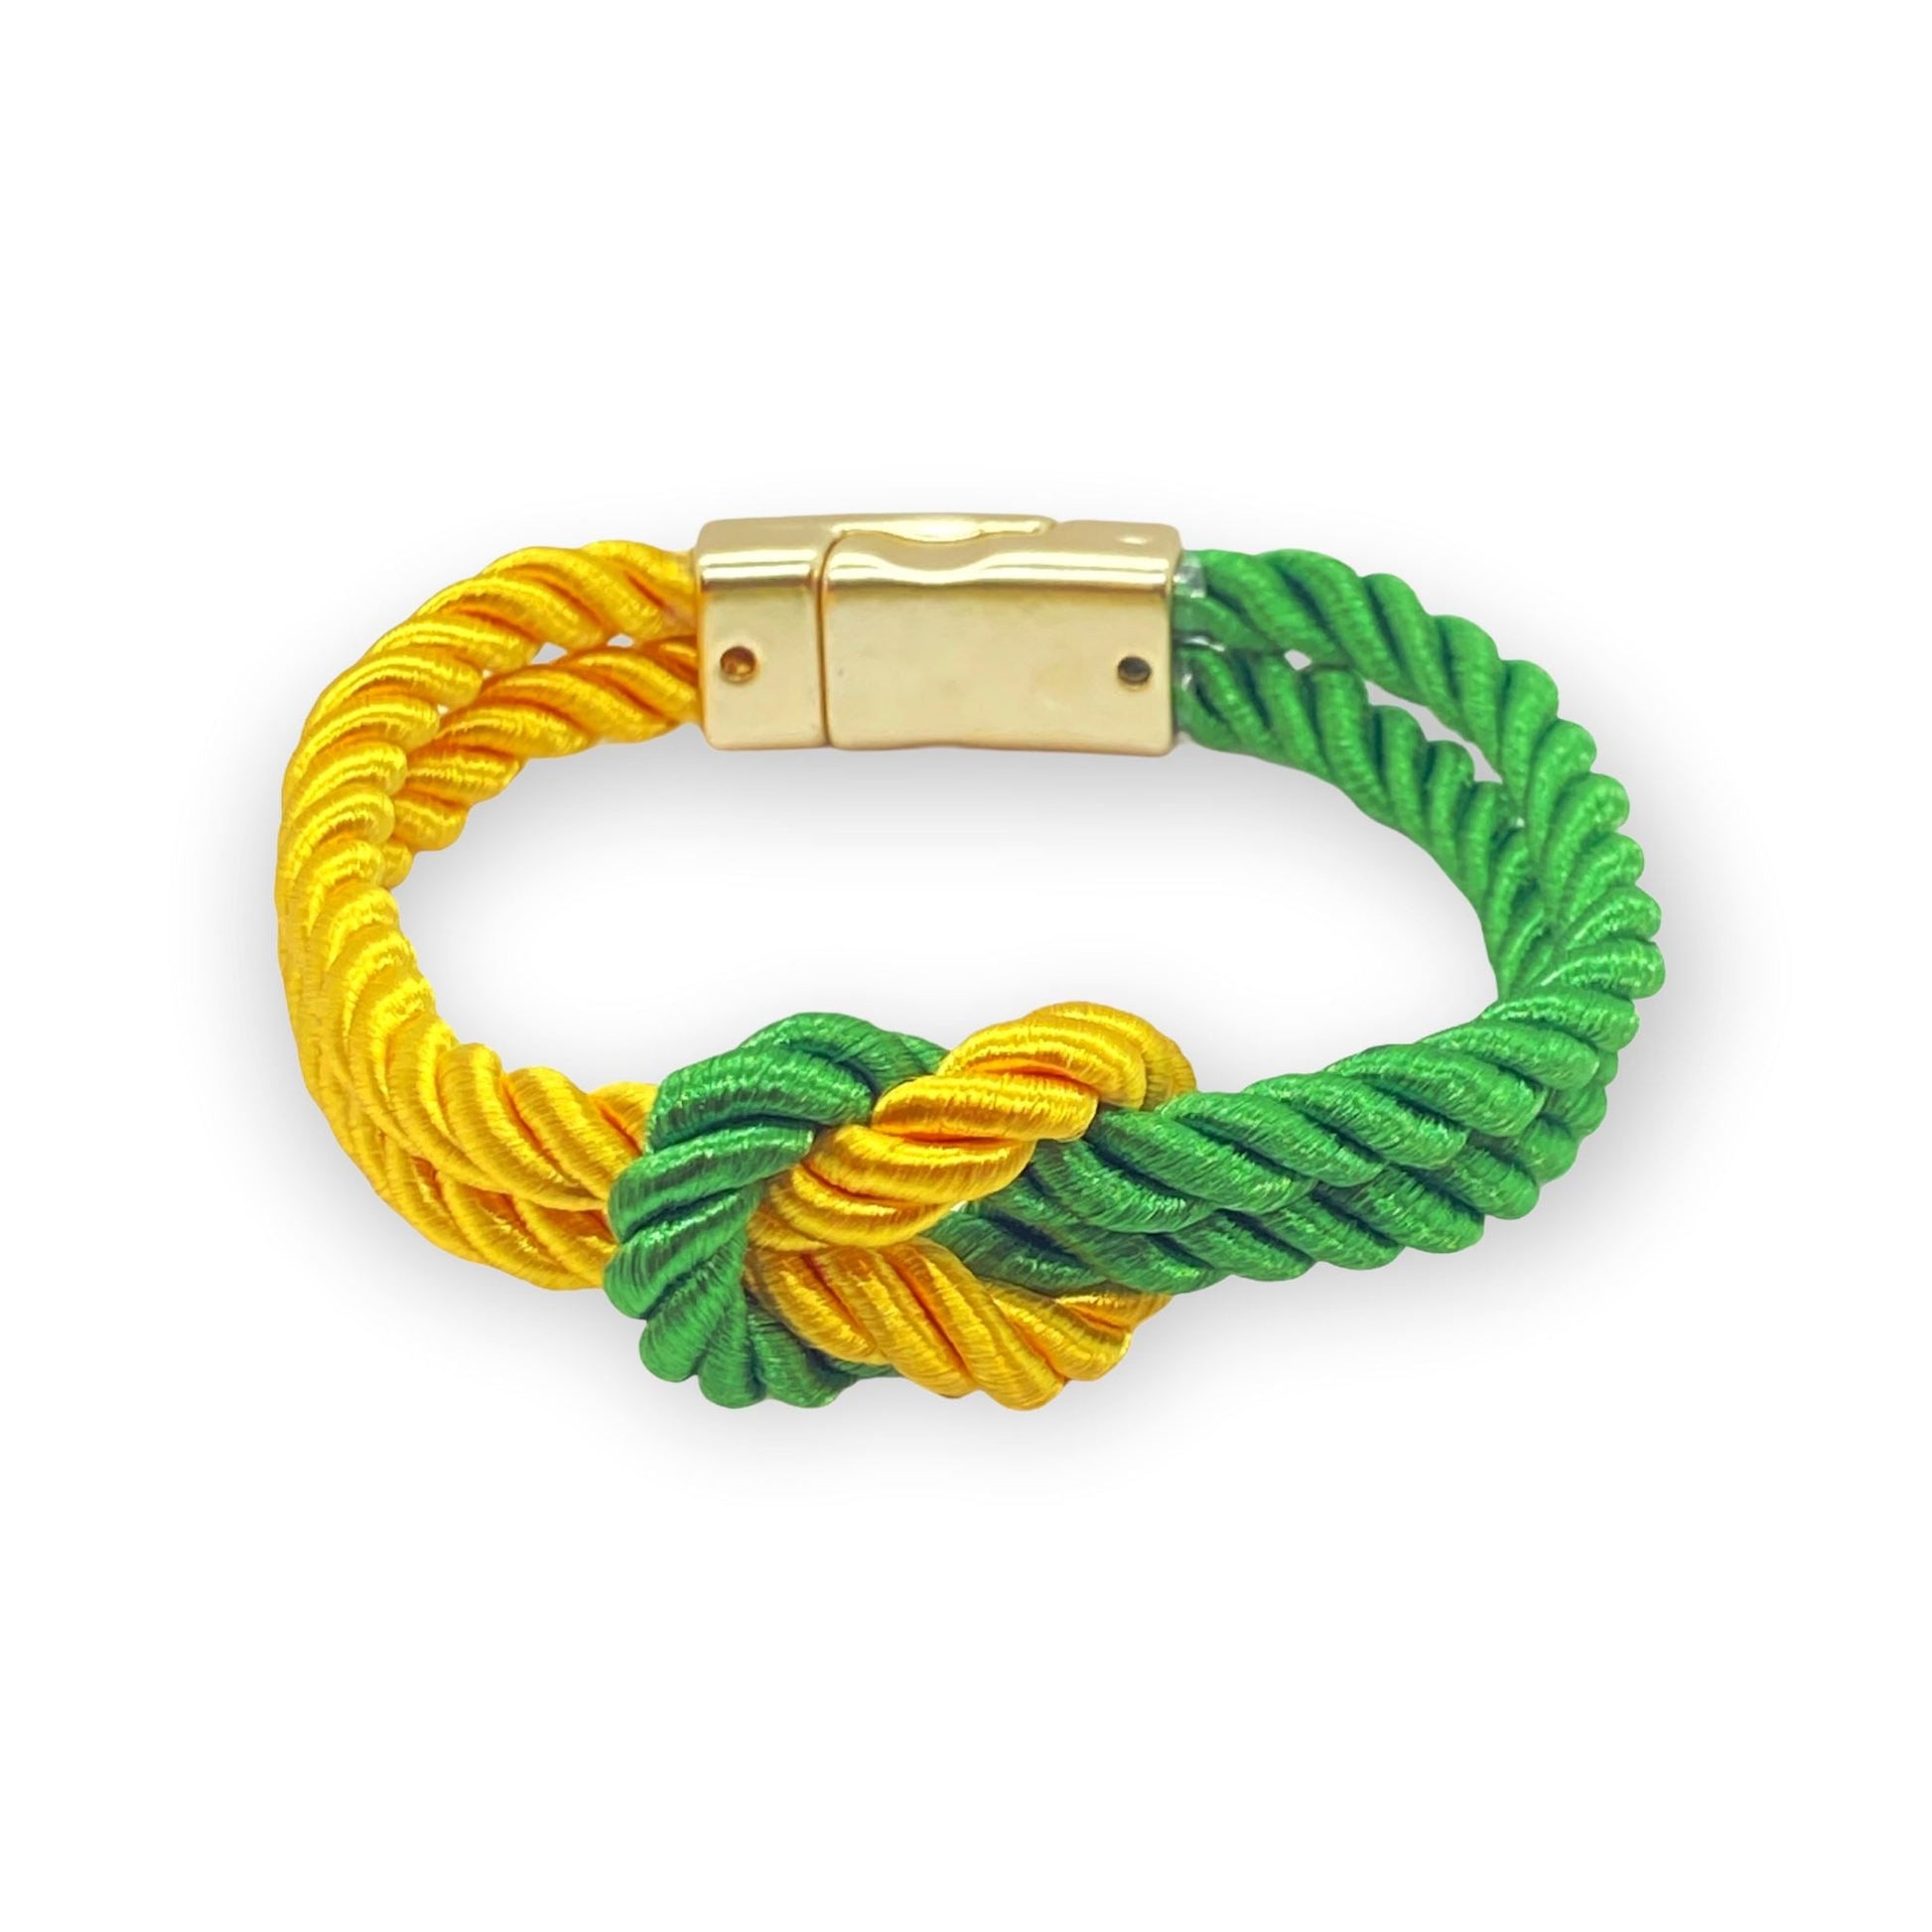 The Original Love Knot Satin Rope Bracelet- Green and Gold Bracelets Trendzio Green and Gold 